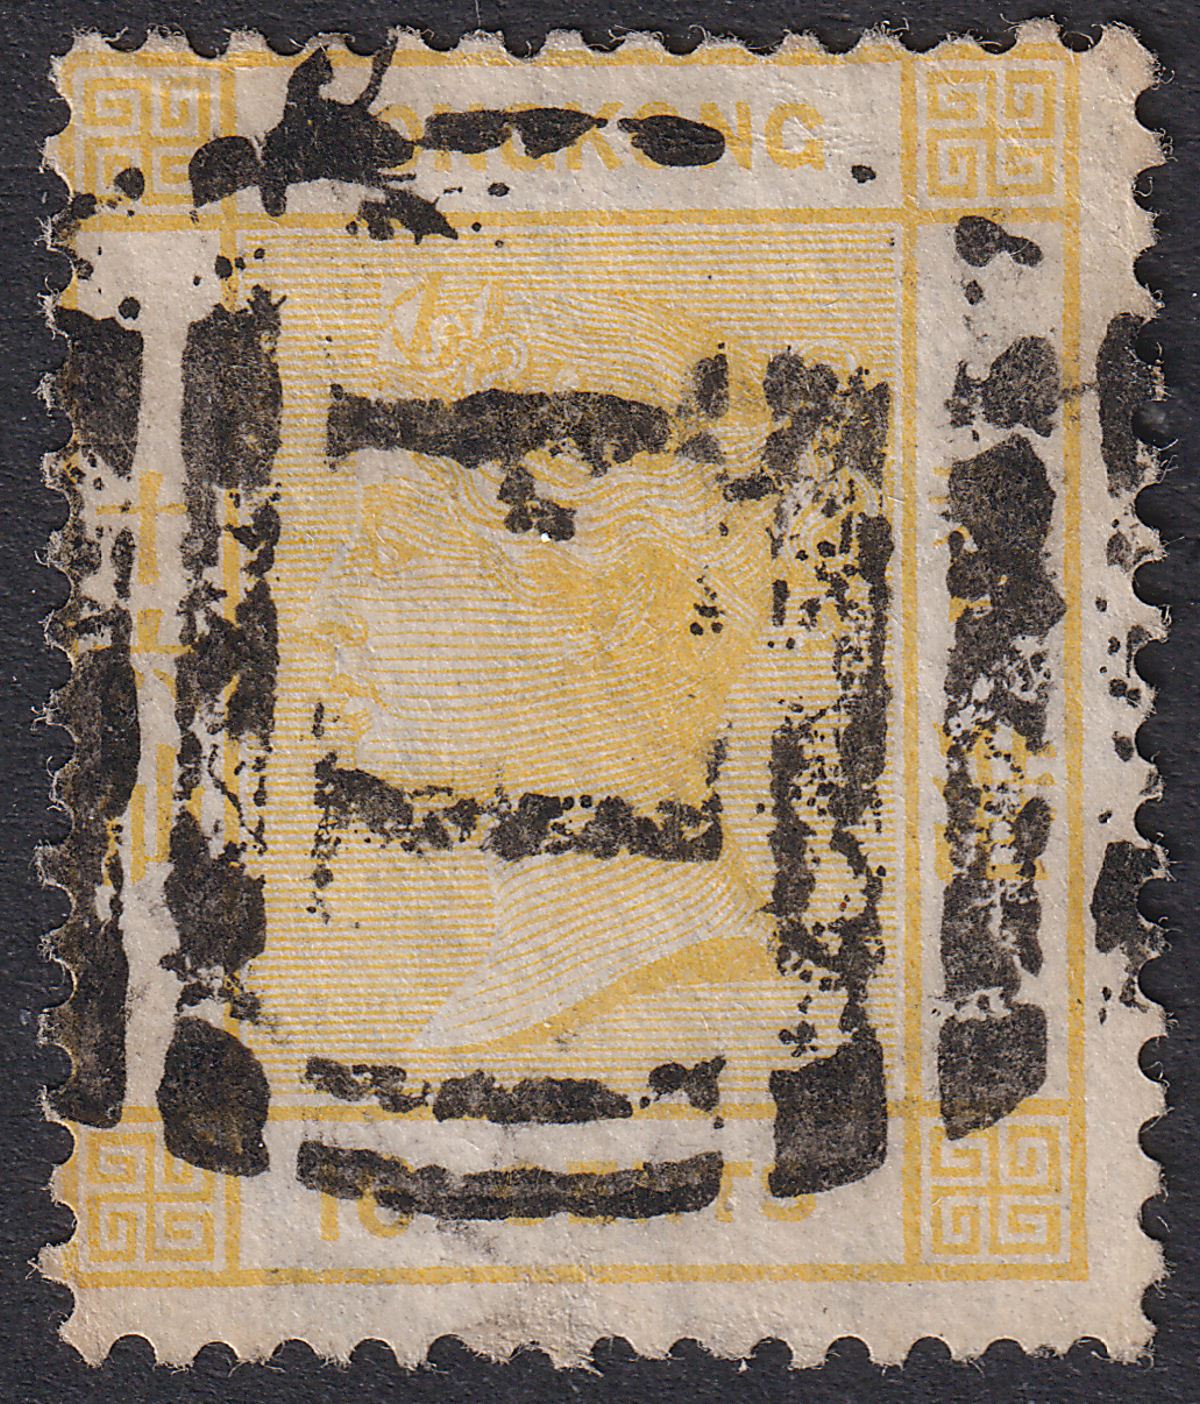 Hong Kong 1877 QV 16c Yellow Used Black Foochow F1 Postmark SG Z337 cat £160 FLT